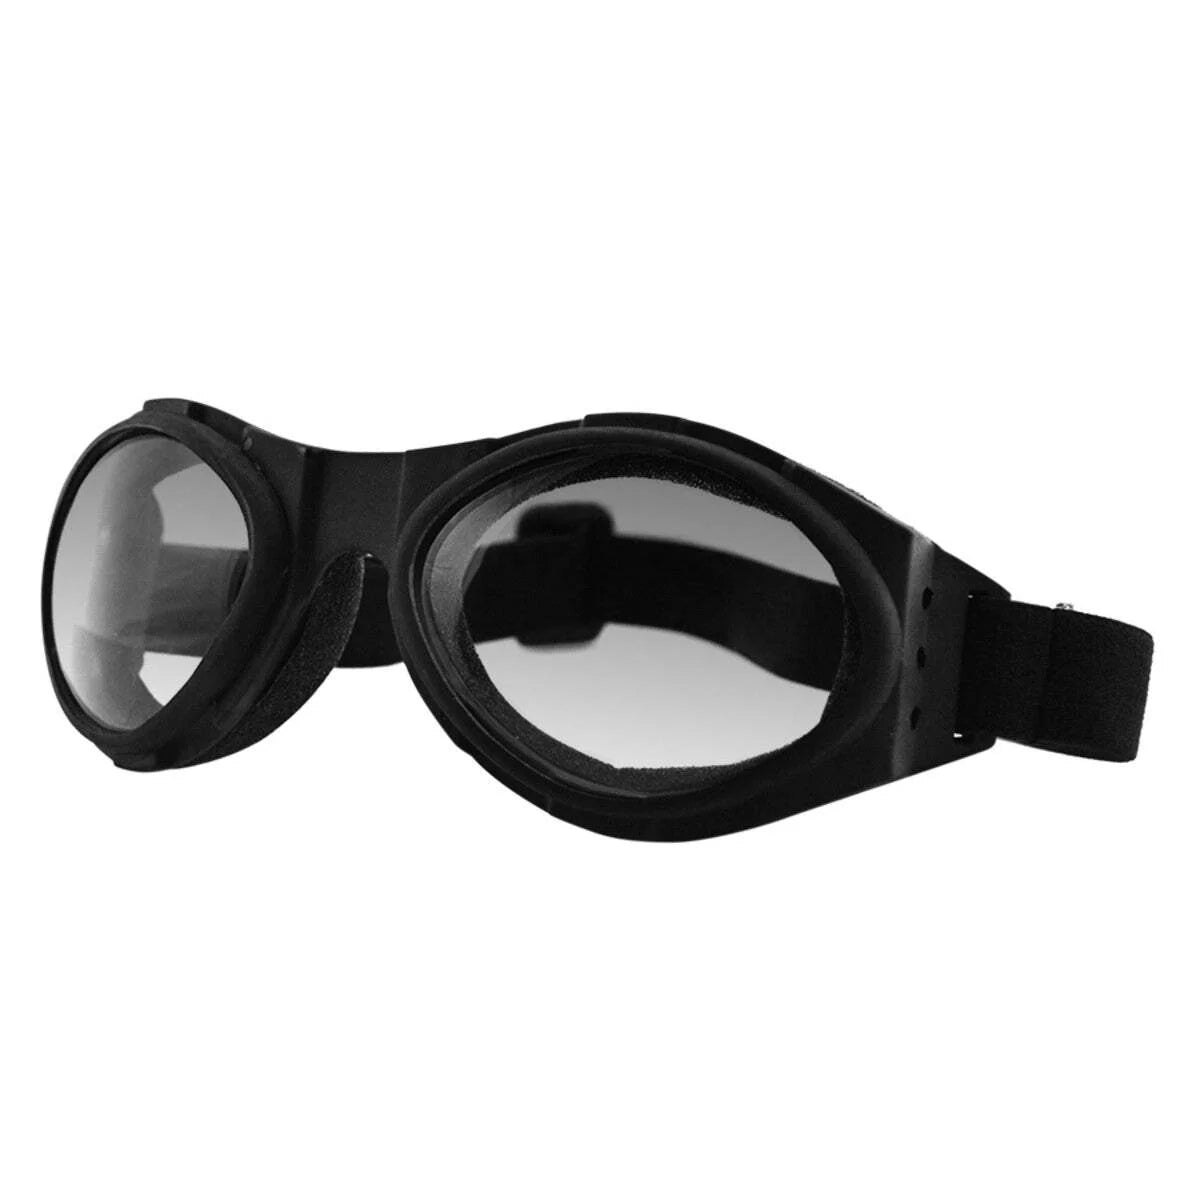 Bobster Bugeye 3 Goggles - Matte Black / Photochromatic Lenses